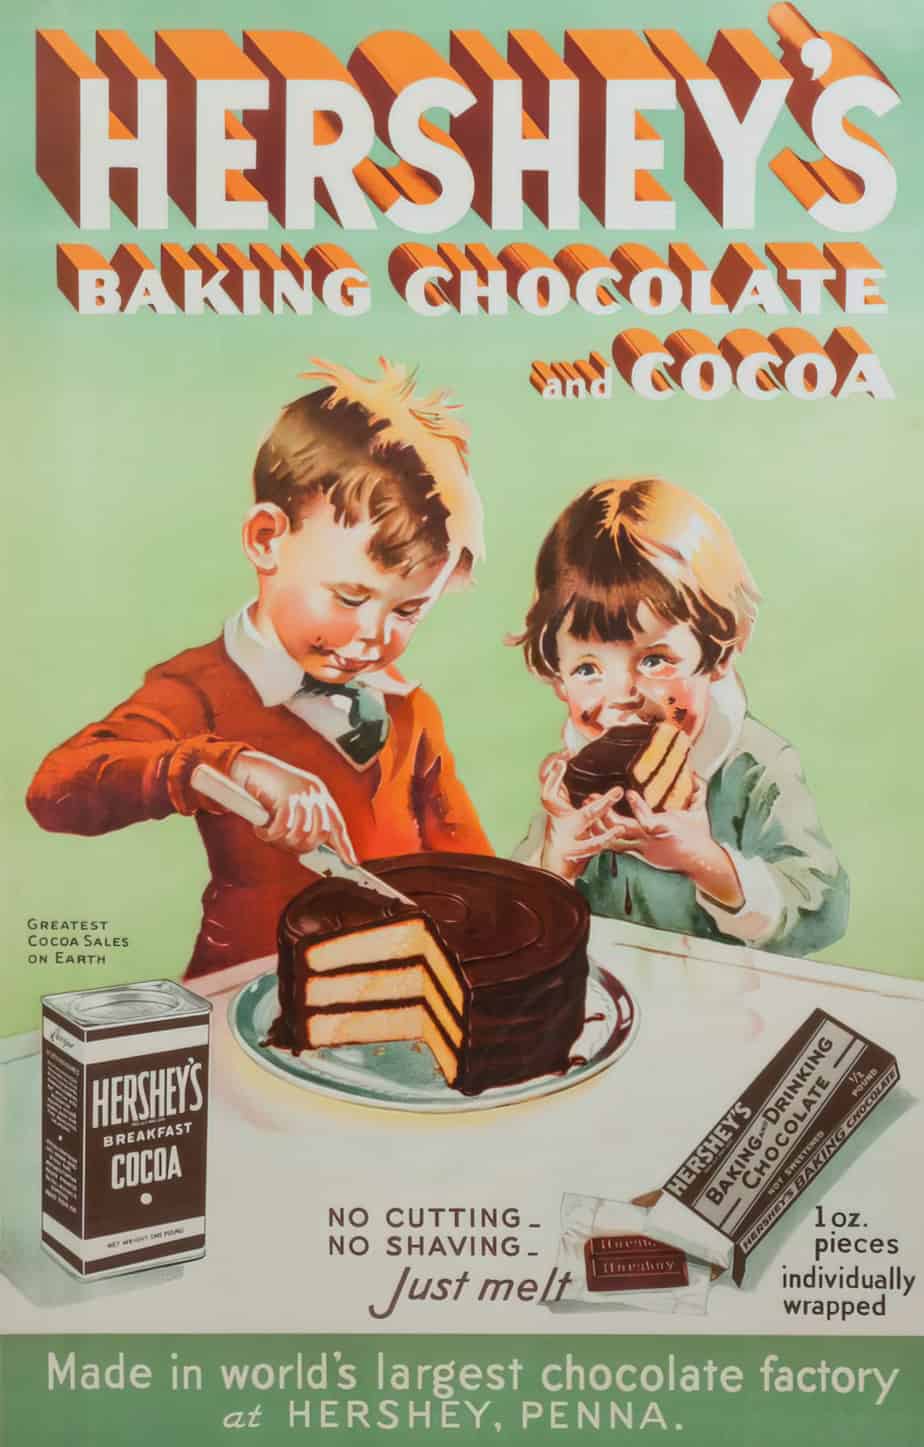 Hersheys Baking Chocolate and Cocoa advertisement c 1934